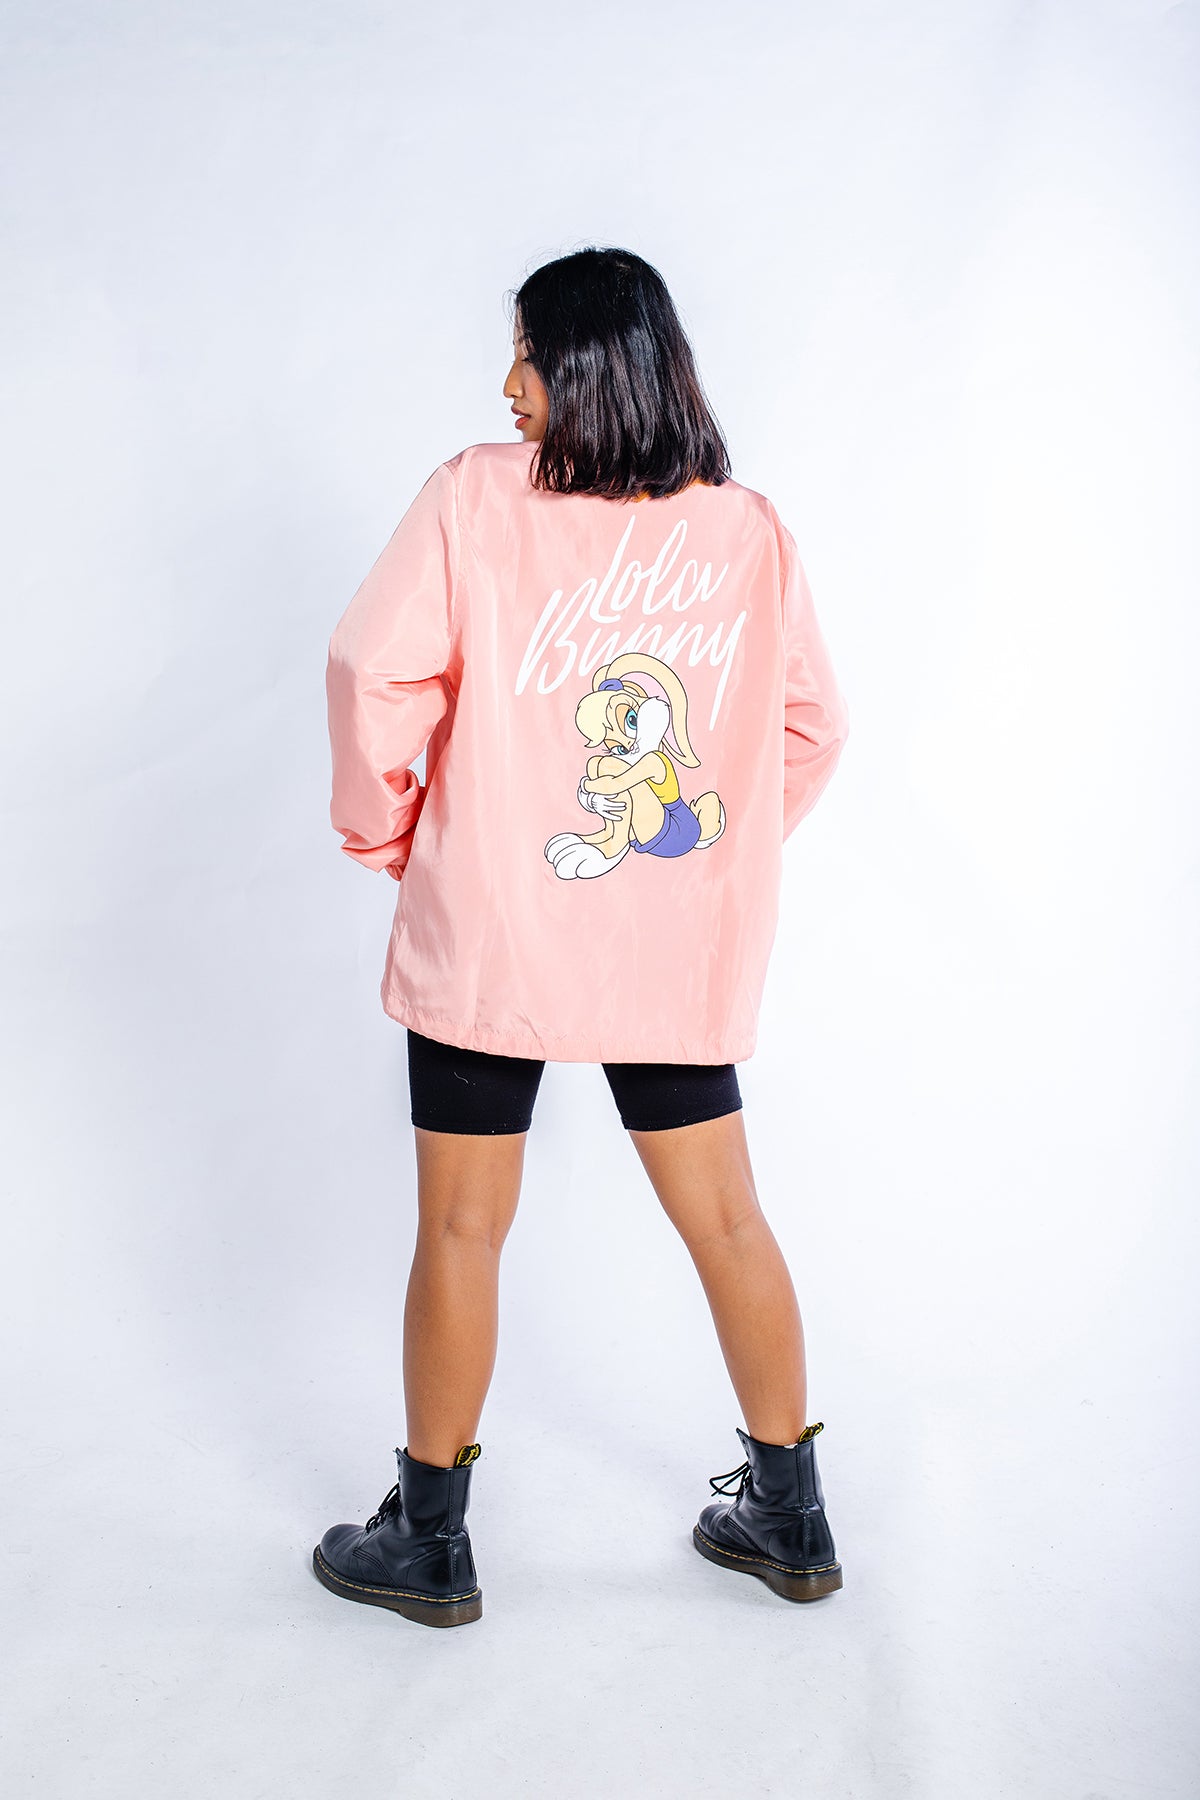 PMC x Looney Tunes Lola Bunny Coaches Jacket Pink